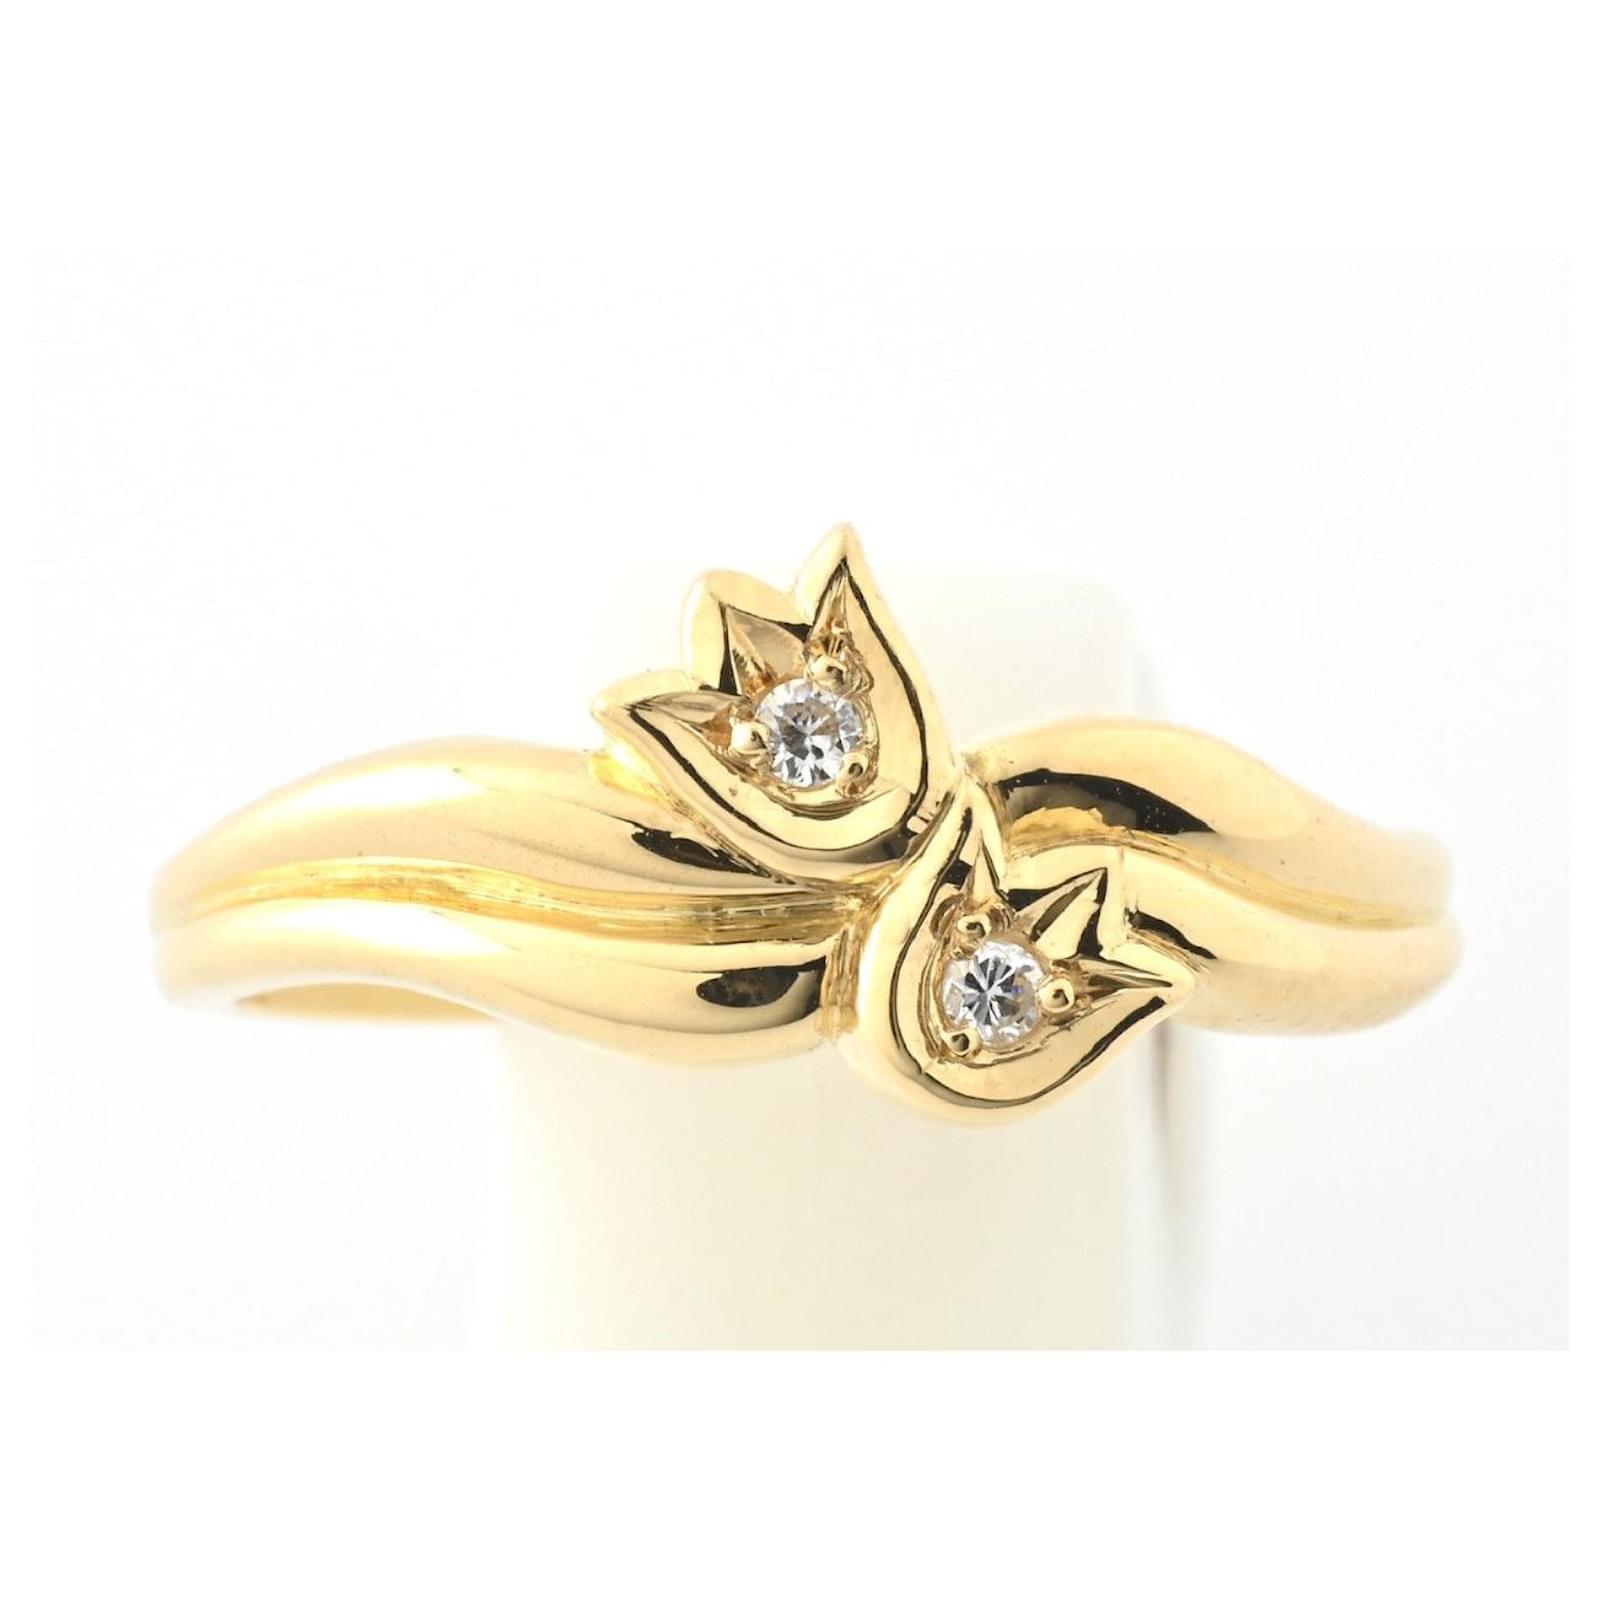 Dior Rose Pré Catelan White Coral Diamond and 18 Carats Yellow Gold Ring   Les Pierres de Julie